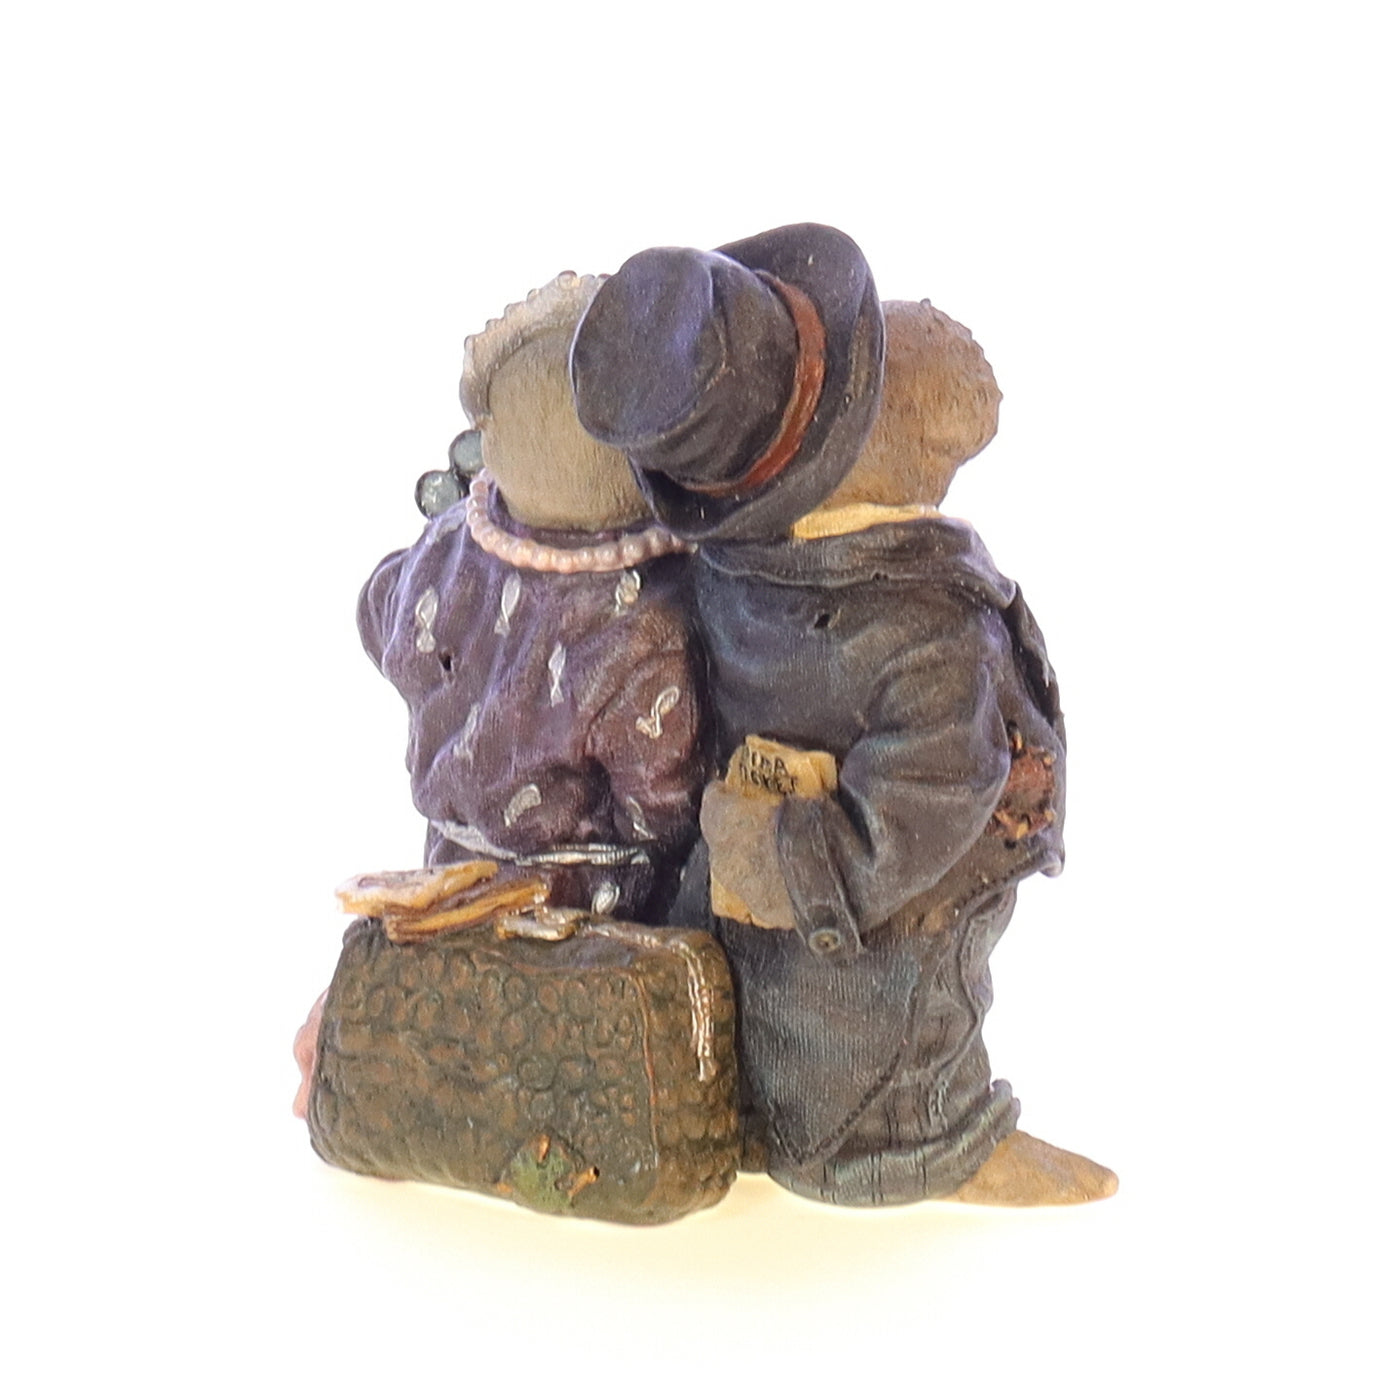 Boyds Bears Resin Figurine in Box 2443 Noah's Ark Series #4 2001 3"